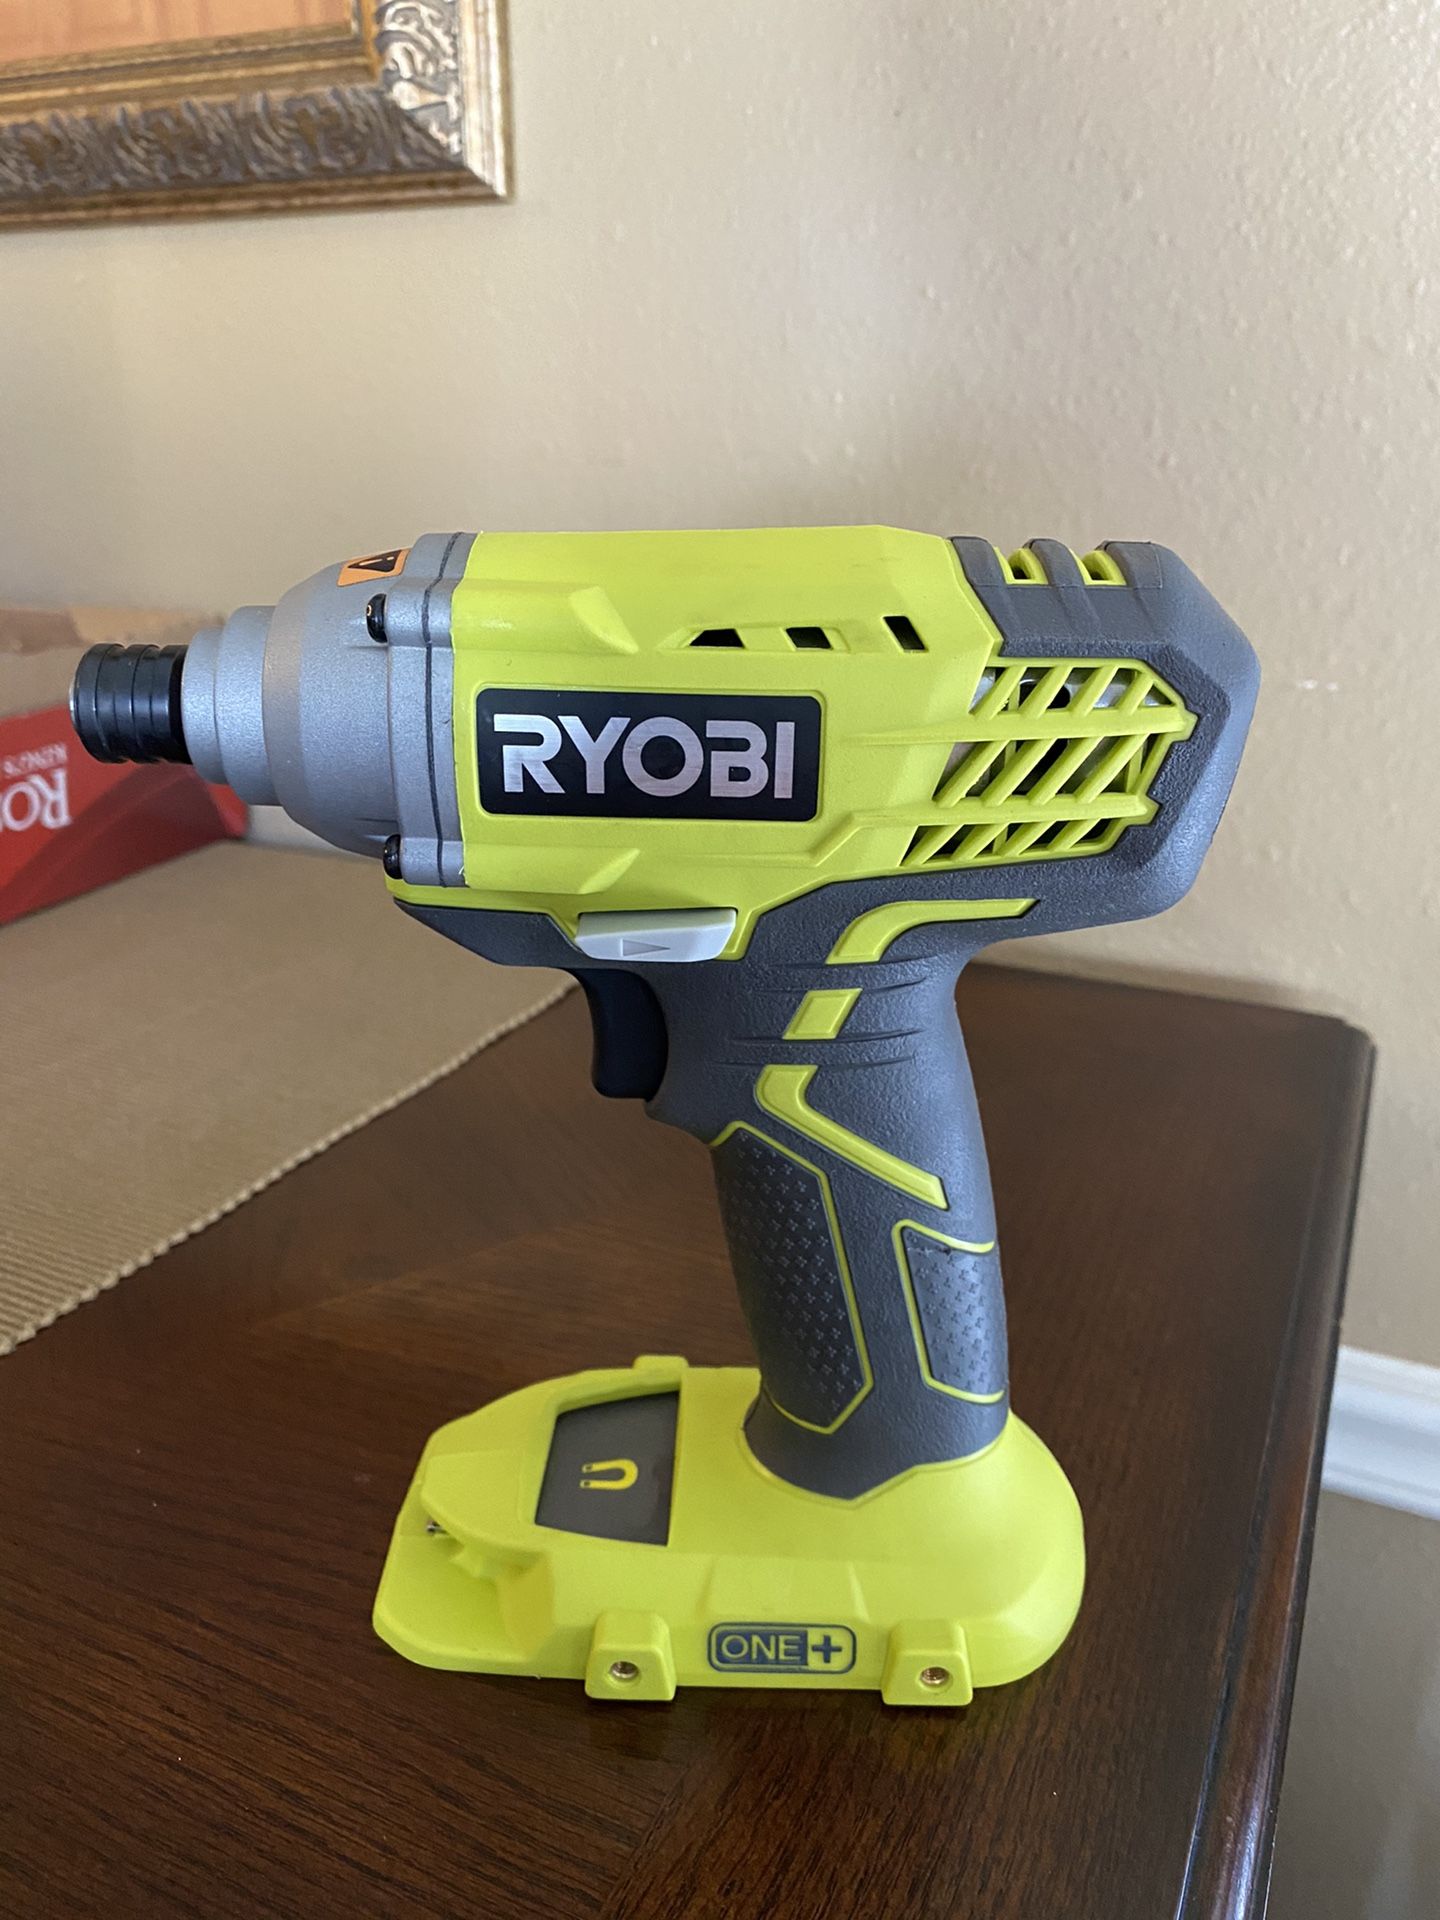 Ryobi impact drill and saw